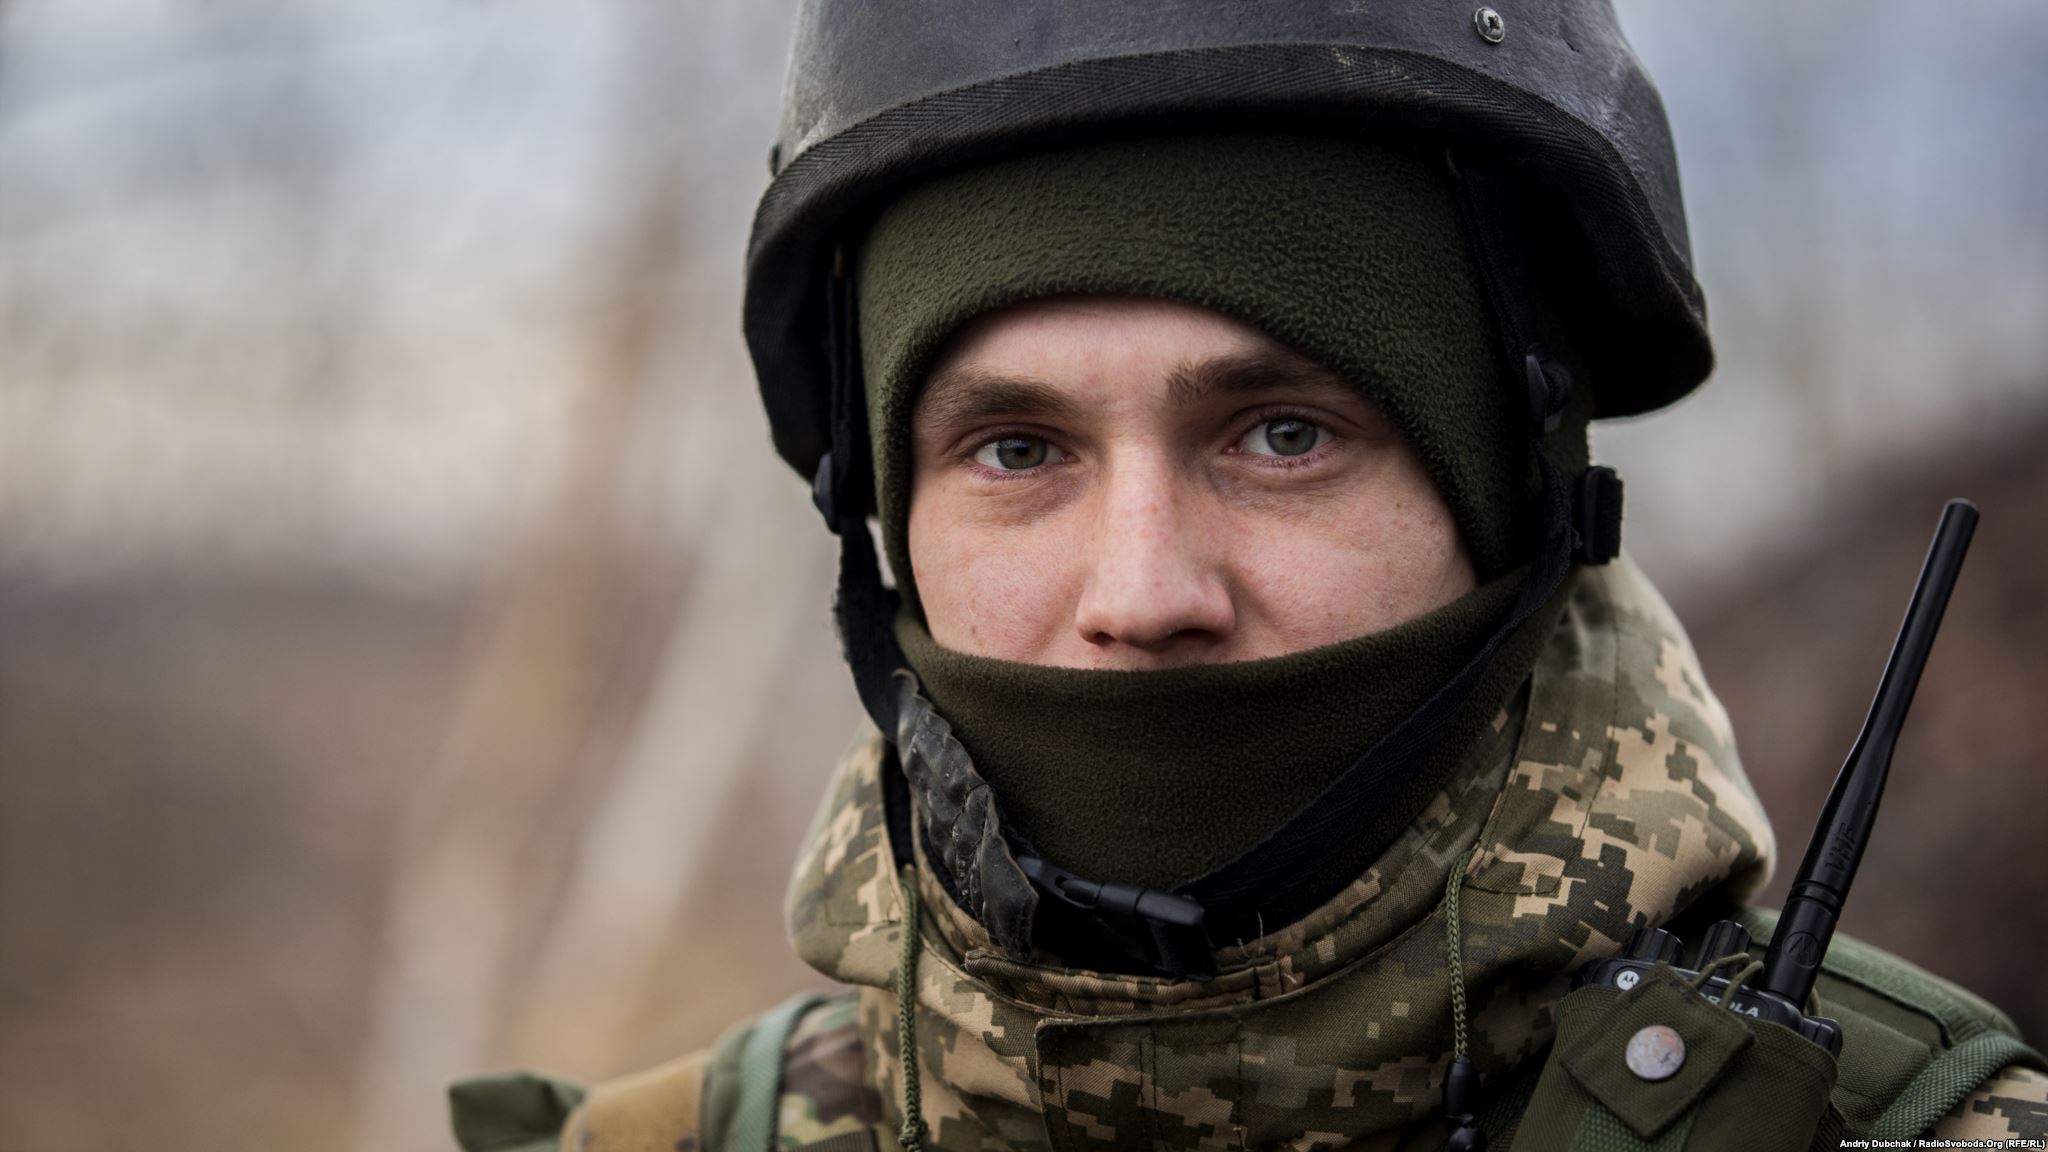 Olexander, 28 years old. Native of Chernihiv region (photo by ukrainian military photographer Andriy Dubchak)